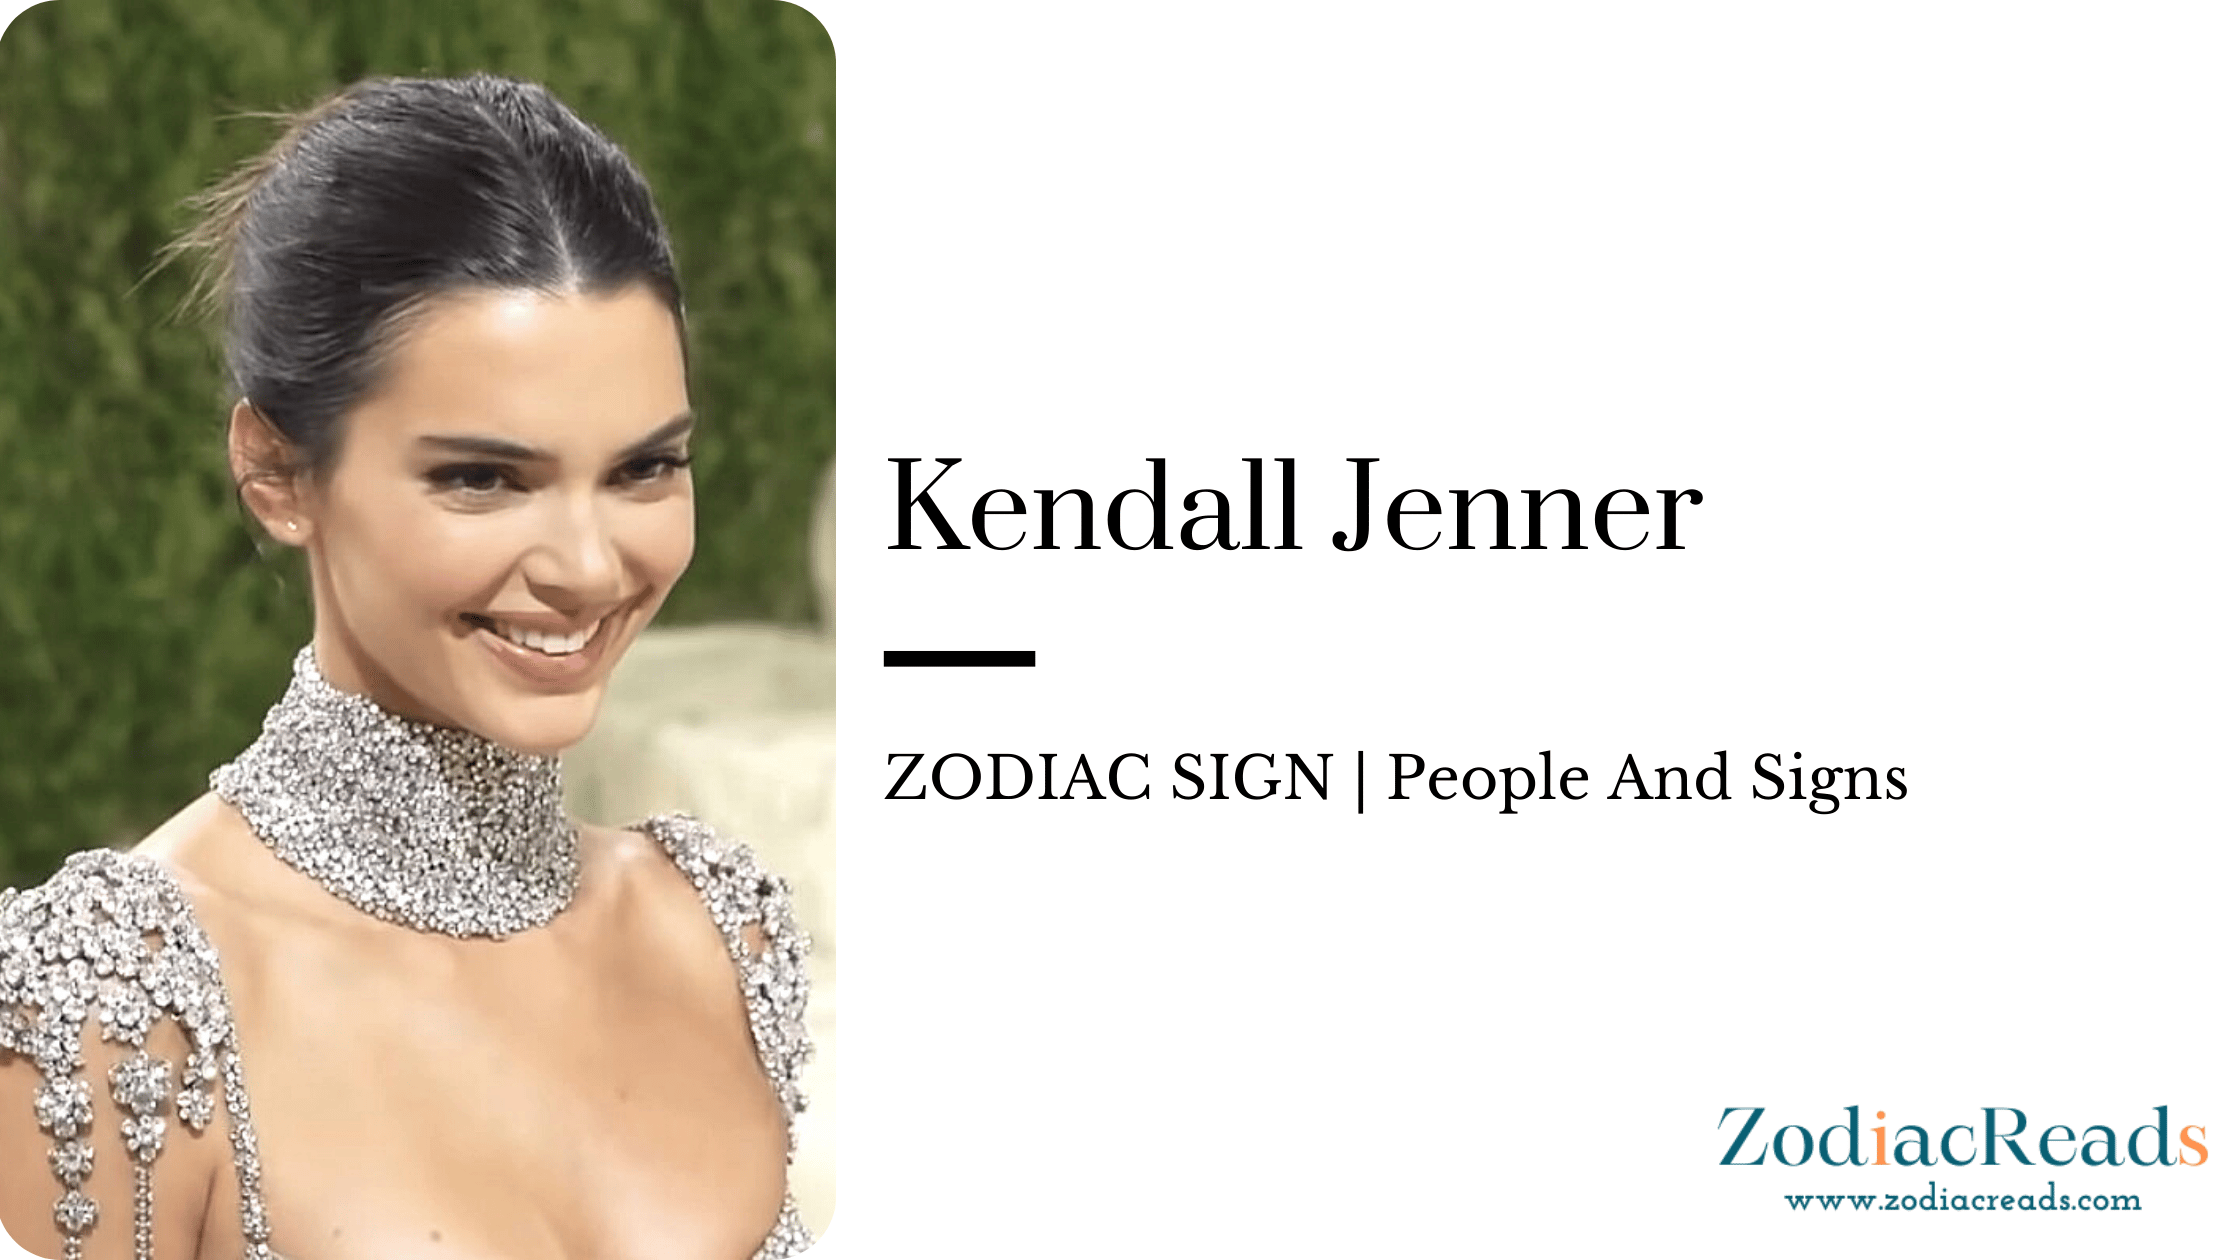 Kendall Jenner zodiac